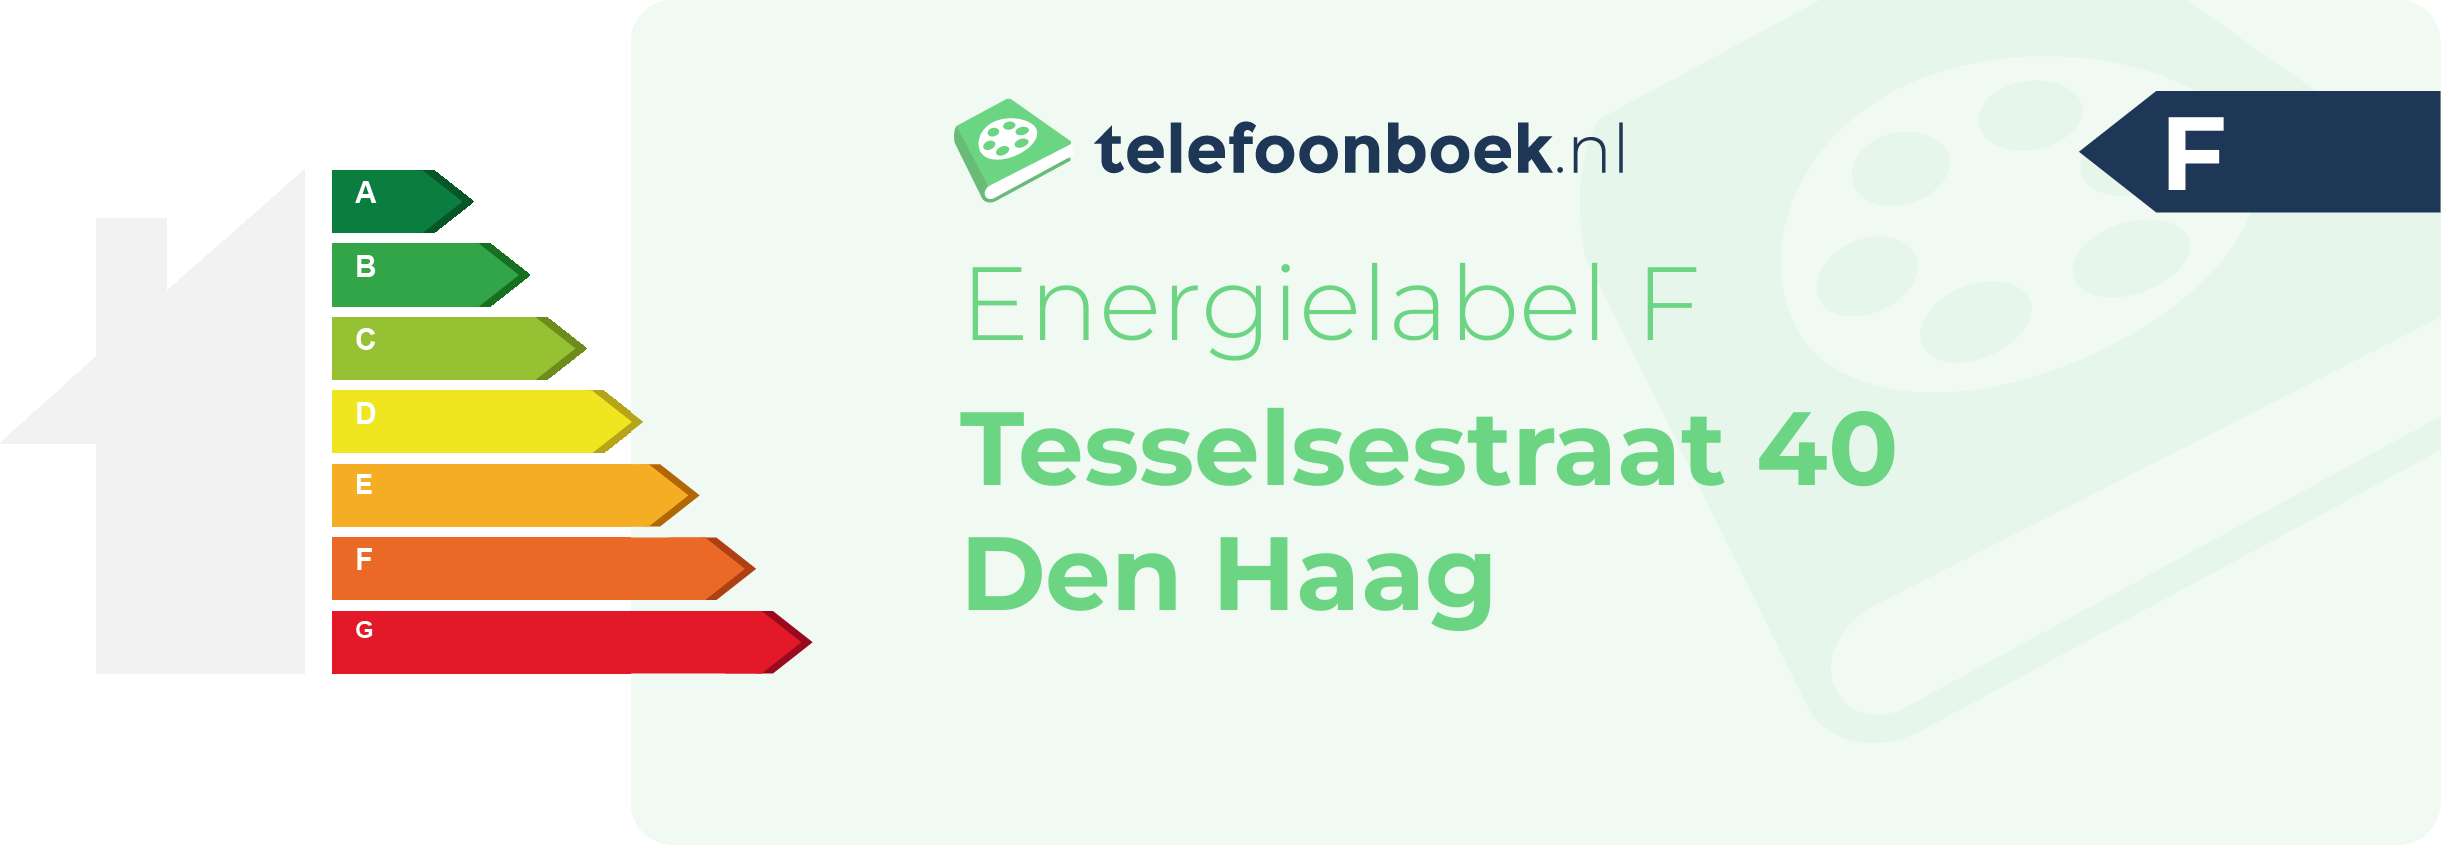 Energielabel Tesselsestraat 40 Den Haag